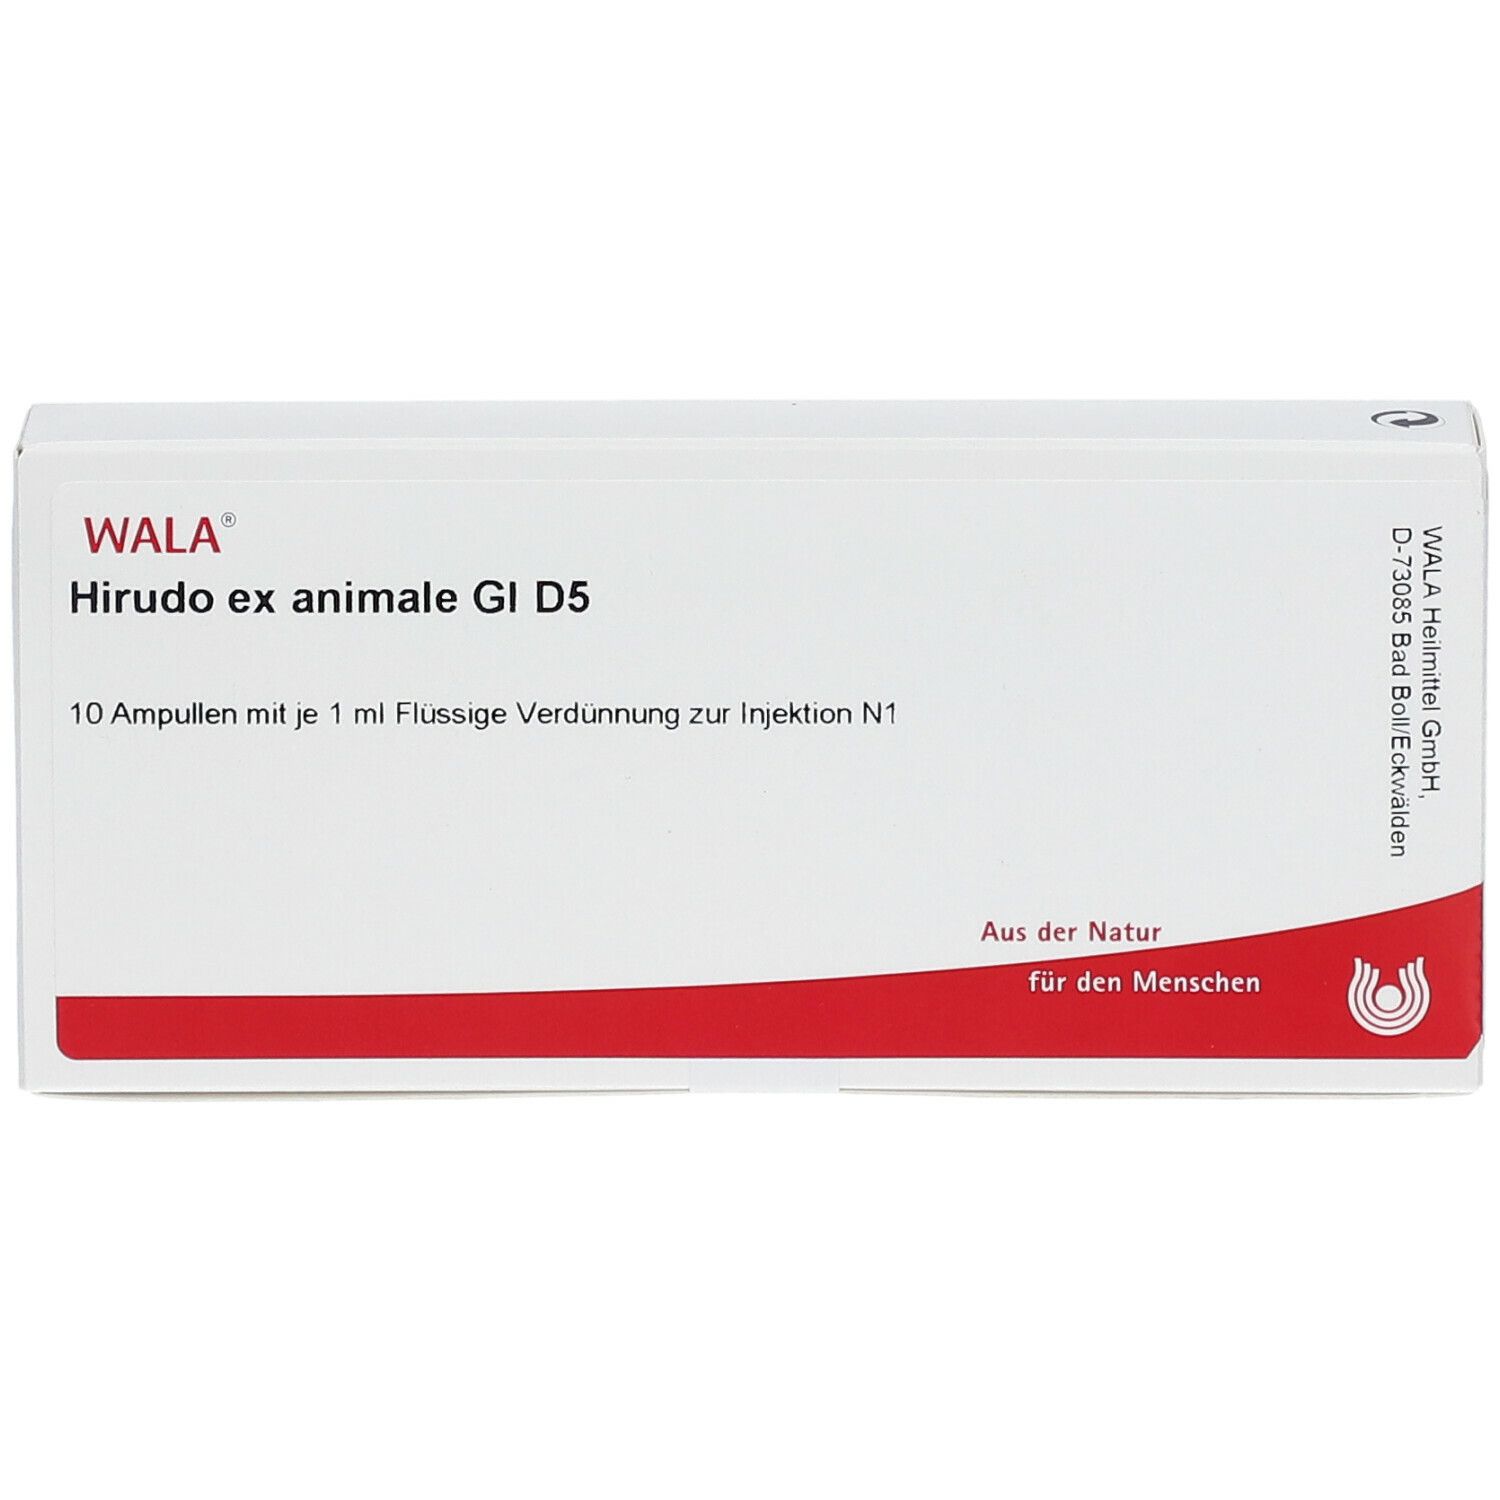 WALA® Hirudo ex animale Gl D 5